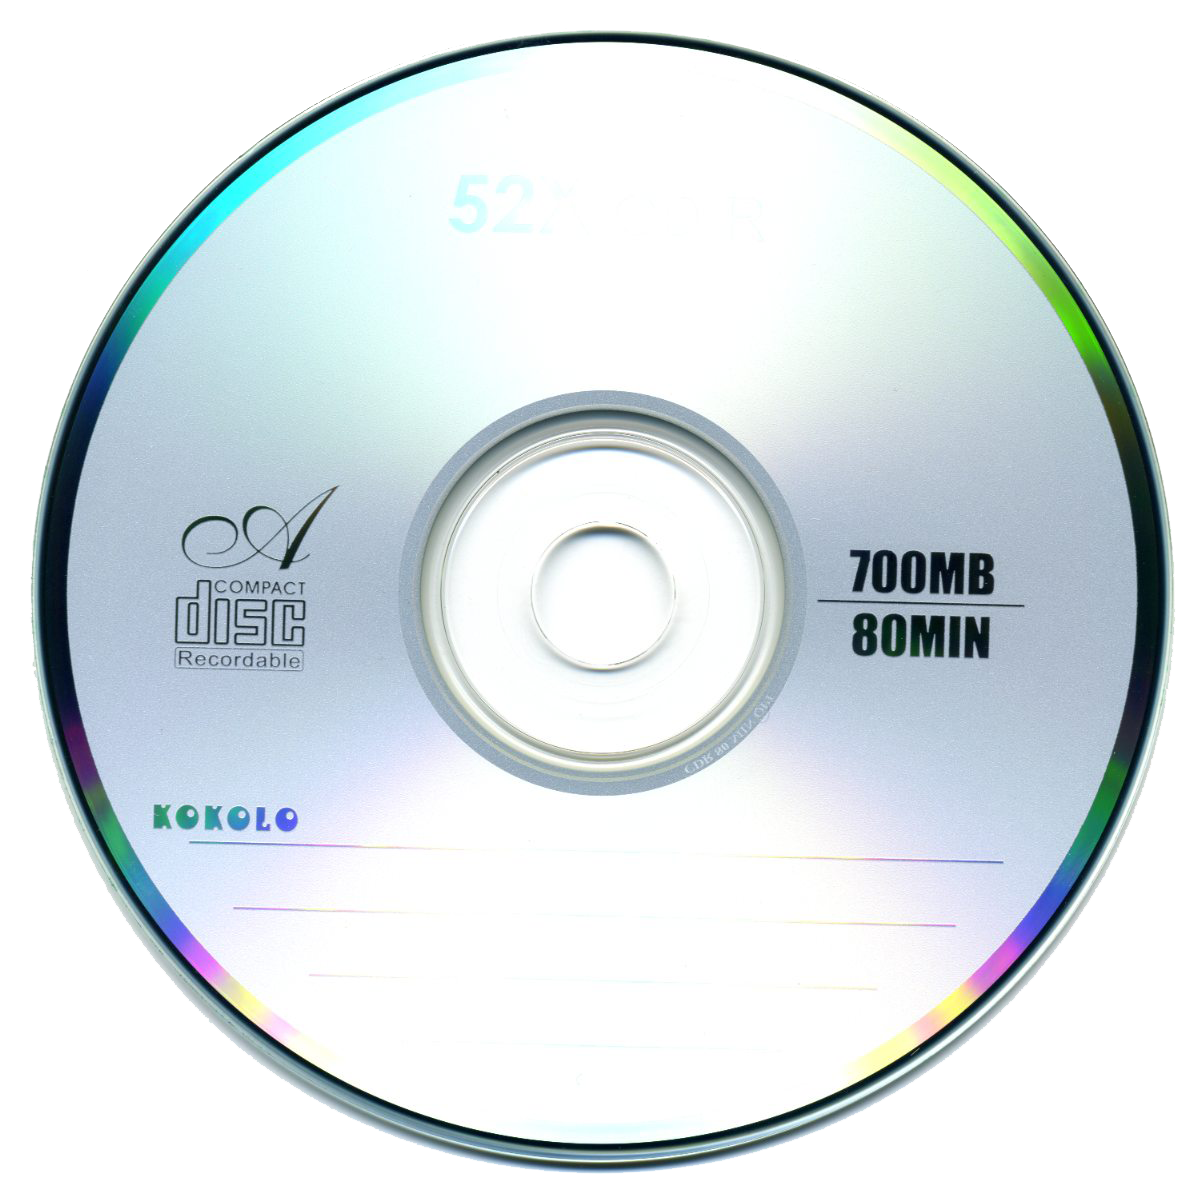 Компакт – диск, Compact Disc (CD). Двд диск компакт DVD. CD-R (Compact Disk Recorder). Compact Disk, DVD.